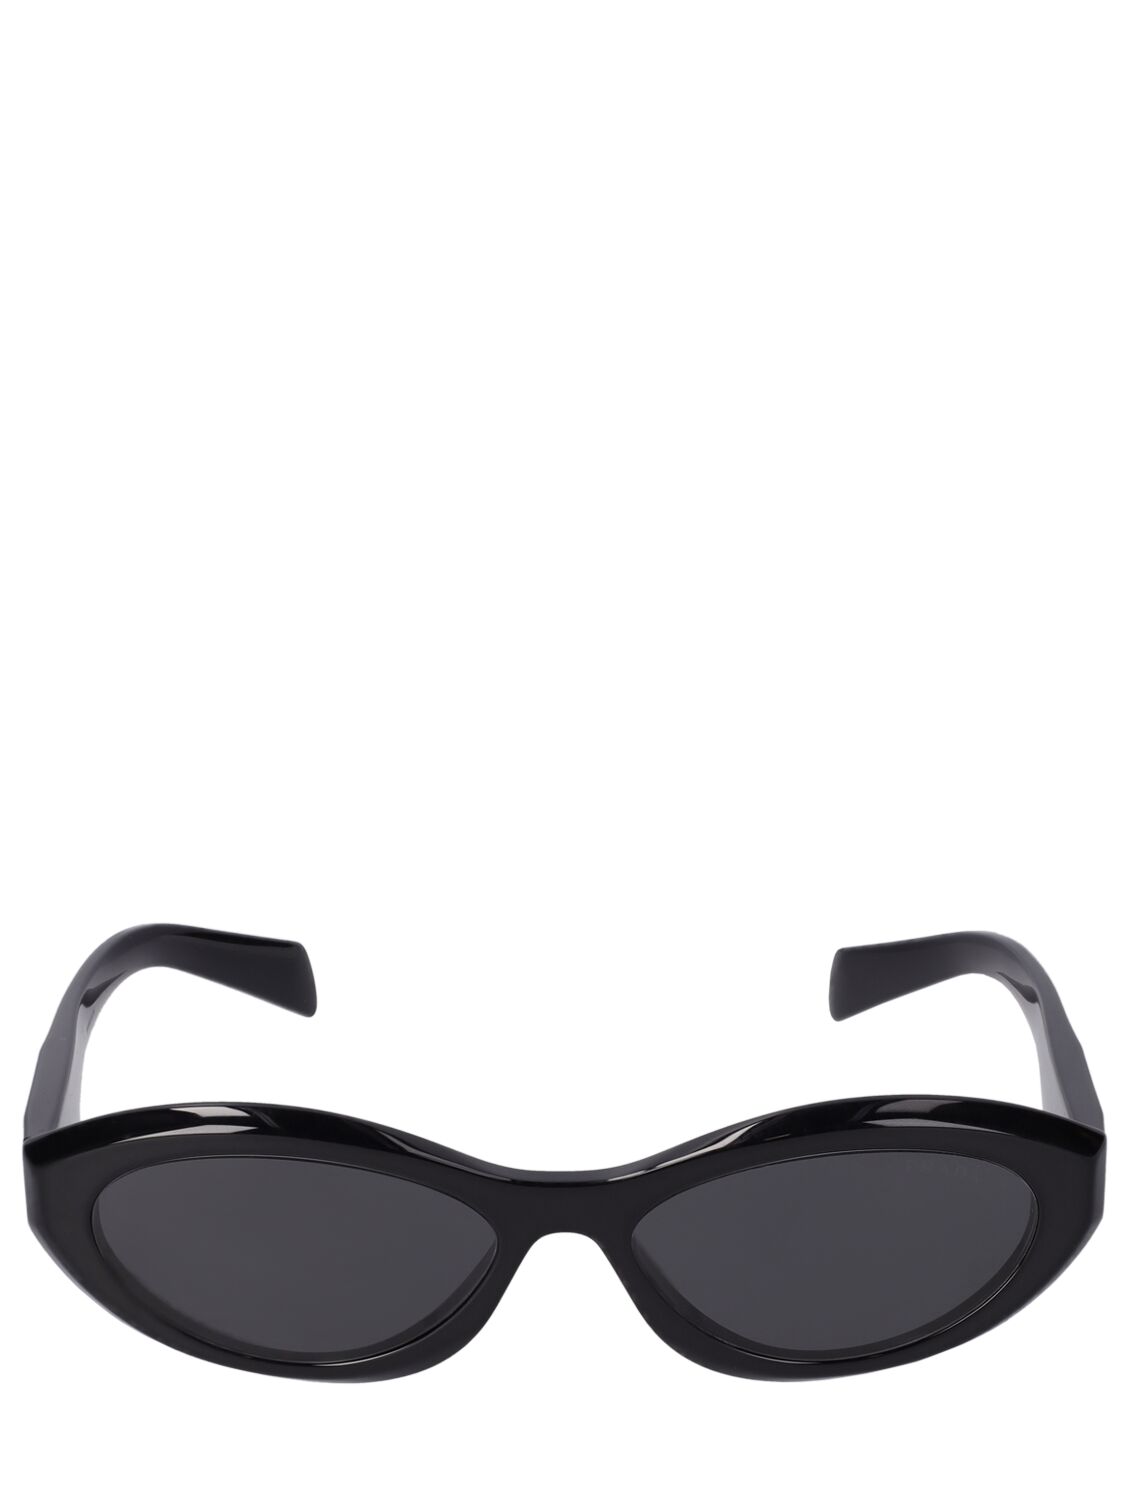 Catwalk Cat-eye Acetate Sunglasses